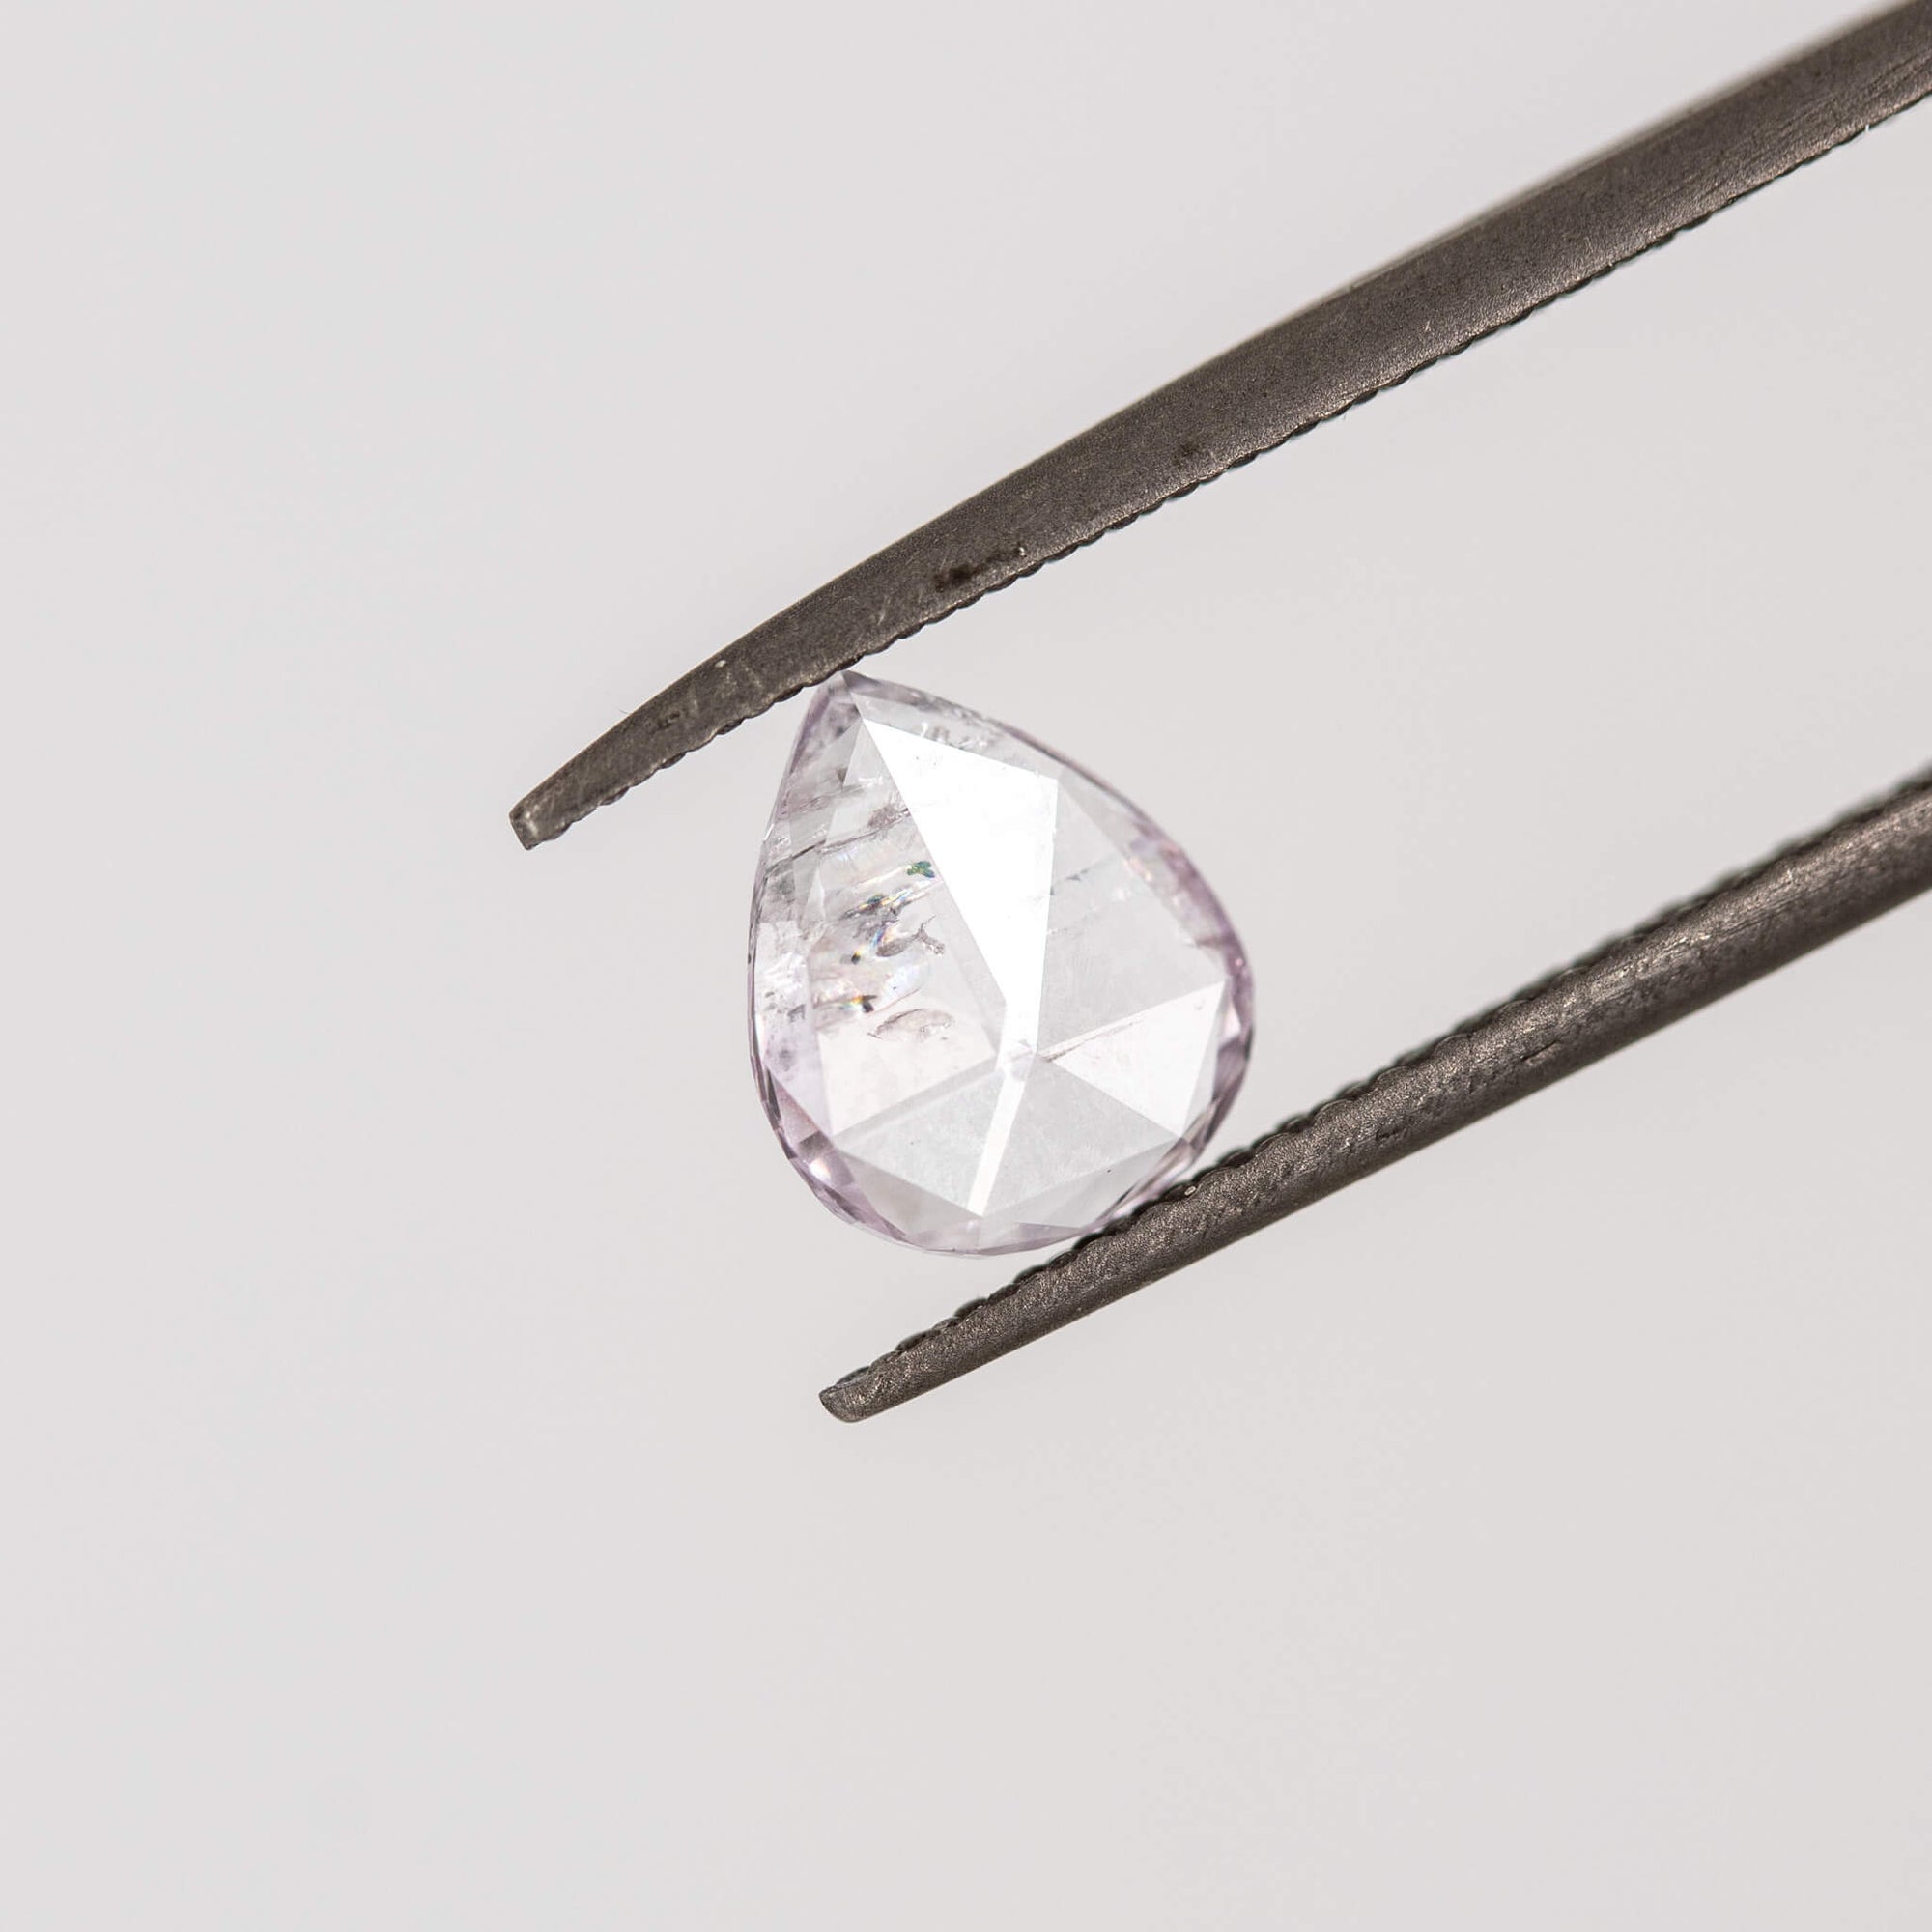 Ld019 Natural Pale Pink Rose Cut Diamond